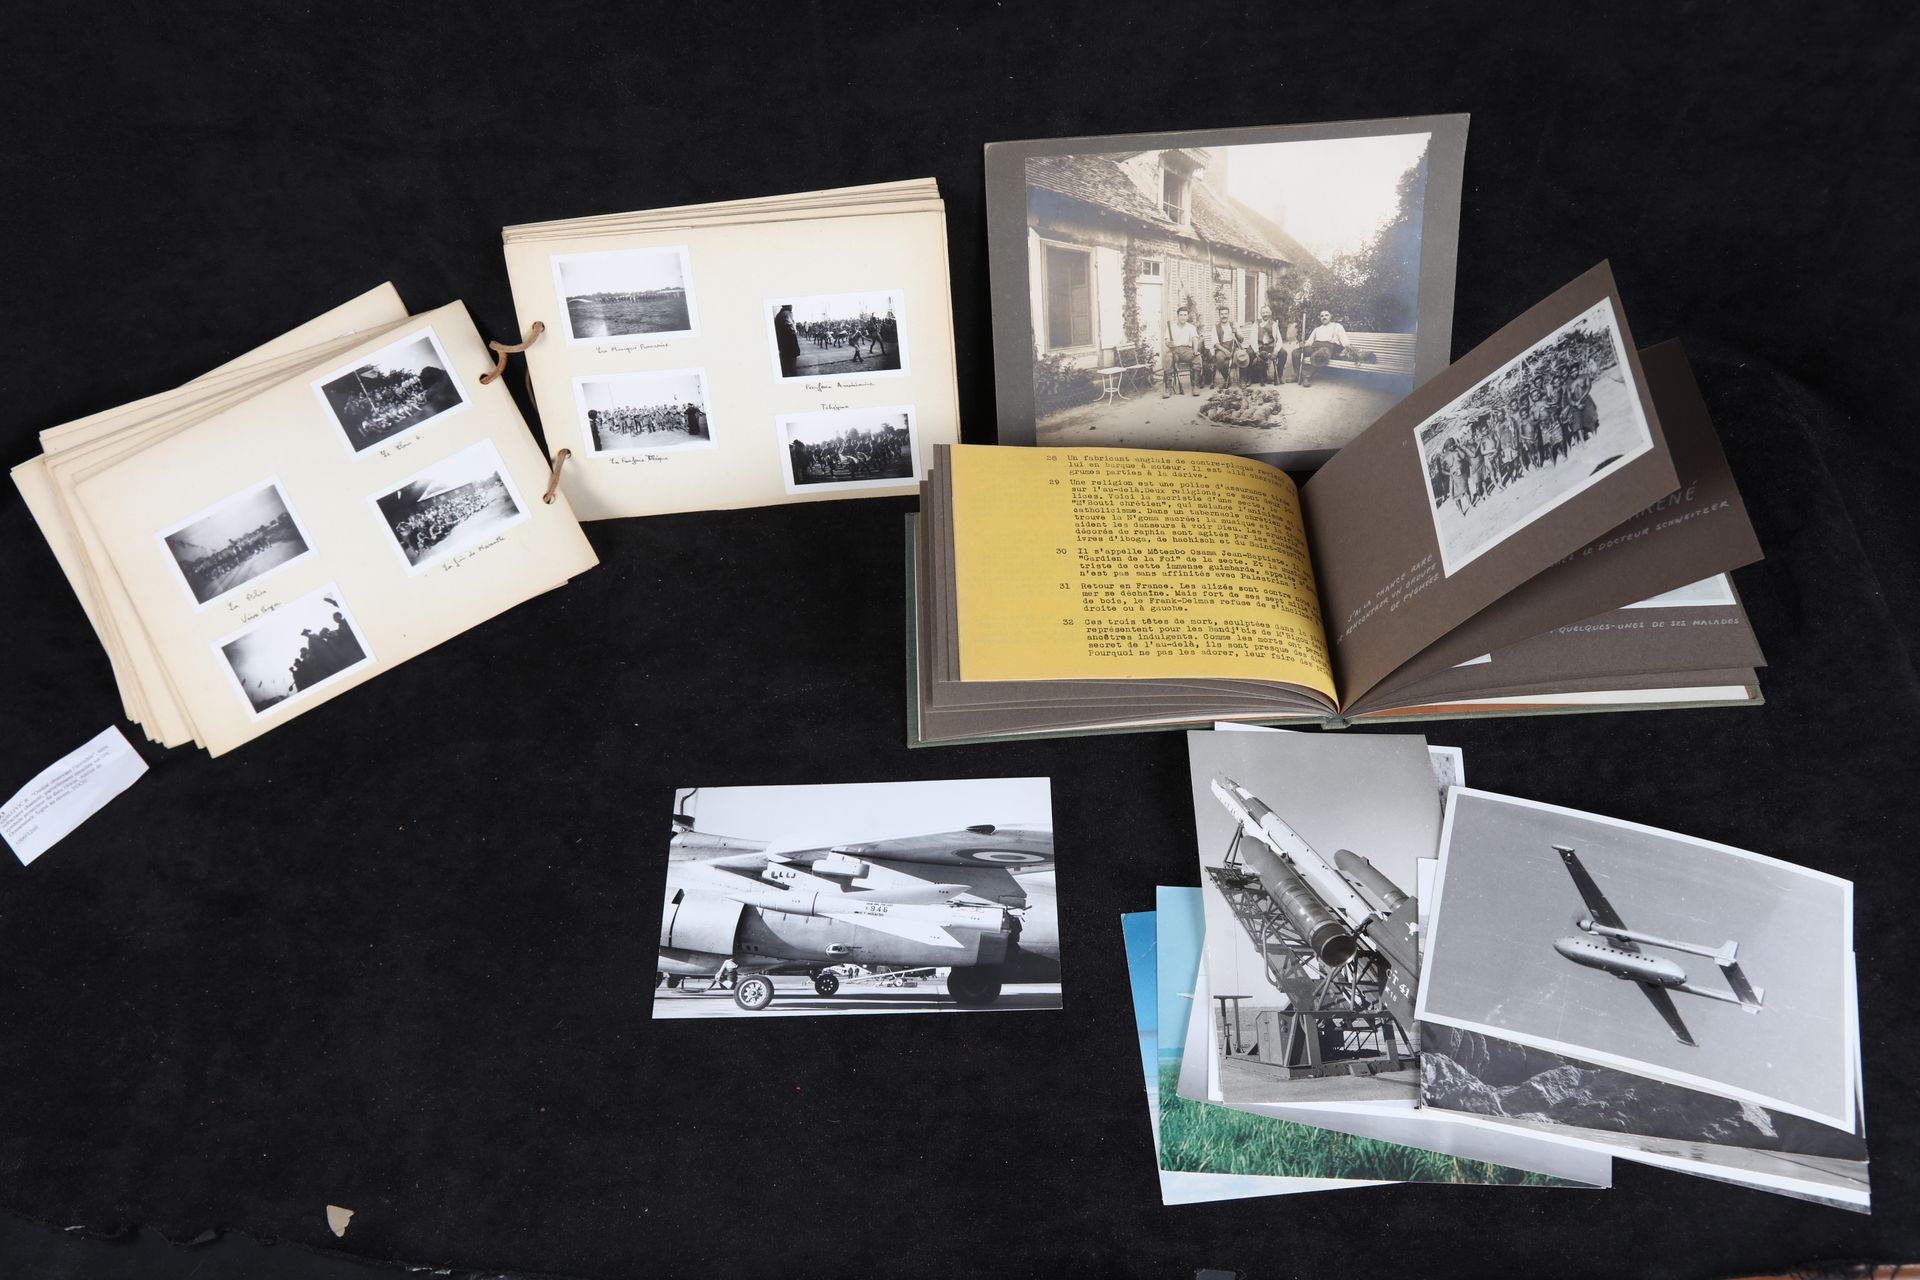 Null 
一批关于航空的时期照片。我们附上：一本 "旅行相册"，是一本复制照片的相册版本。非洲, 人种学, 狩猎场景...